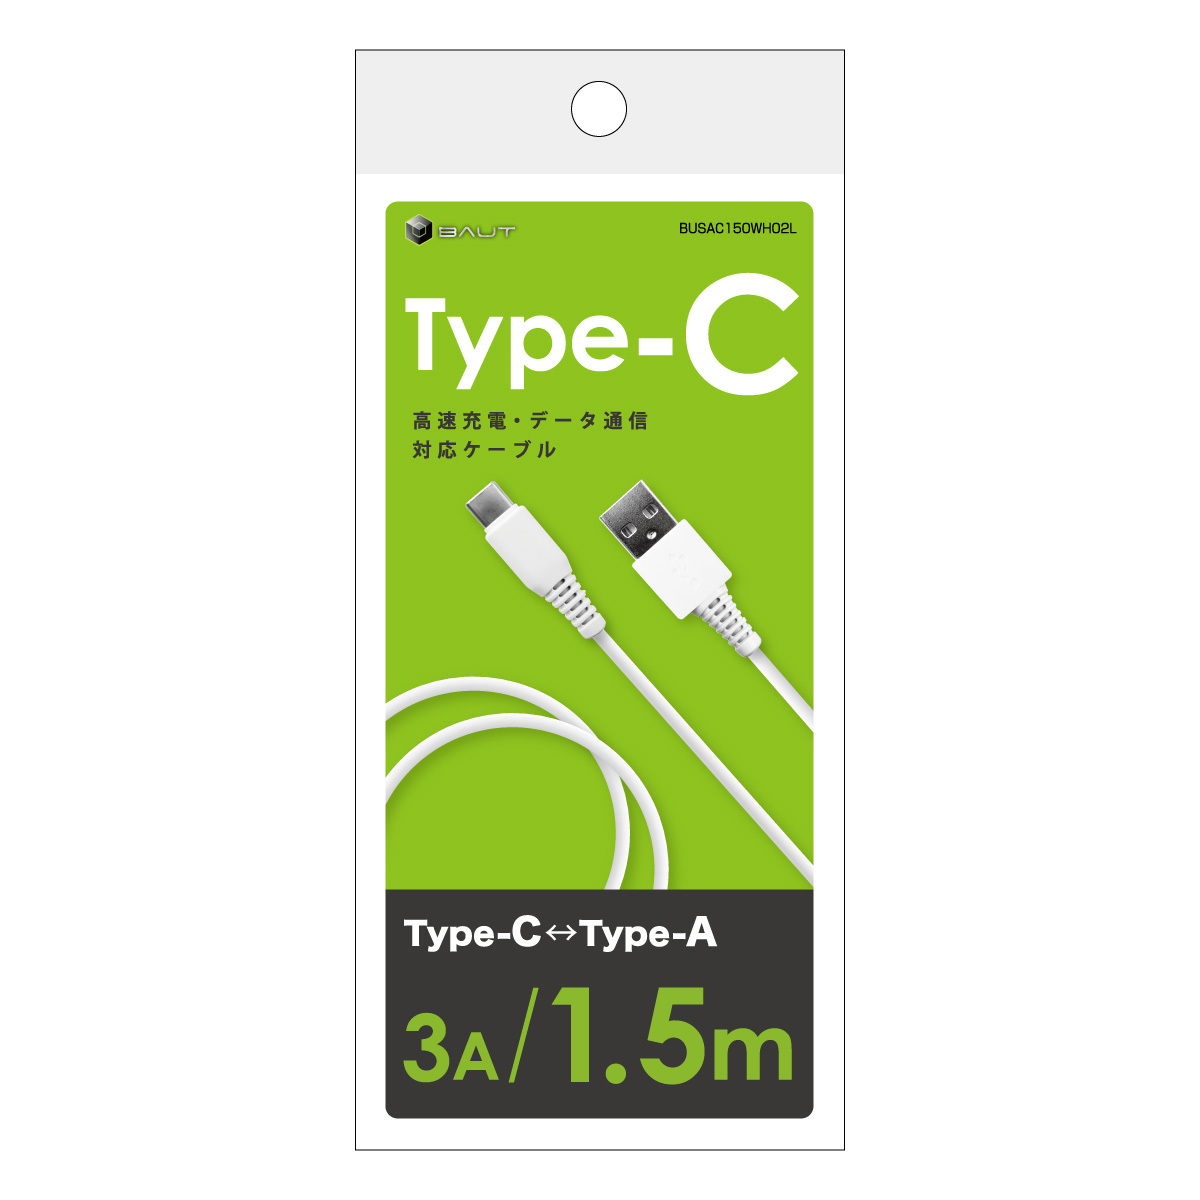 Type-C/Type-A通信・充電ケーブル 3A 1.5m -1